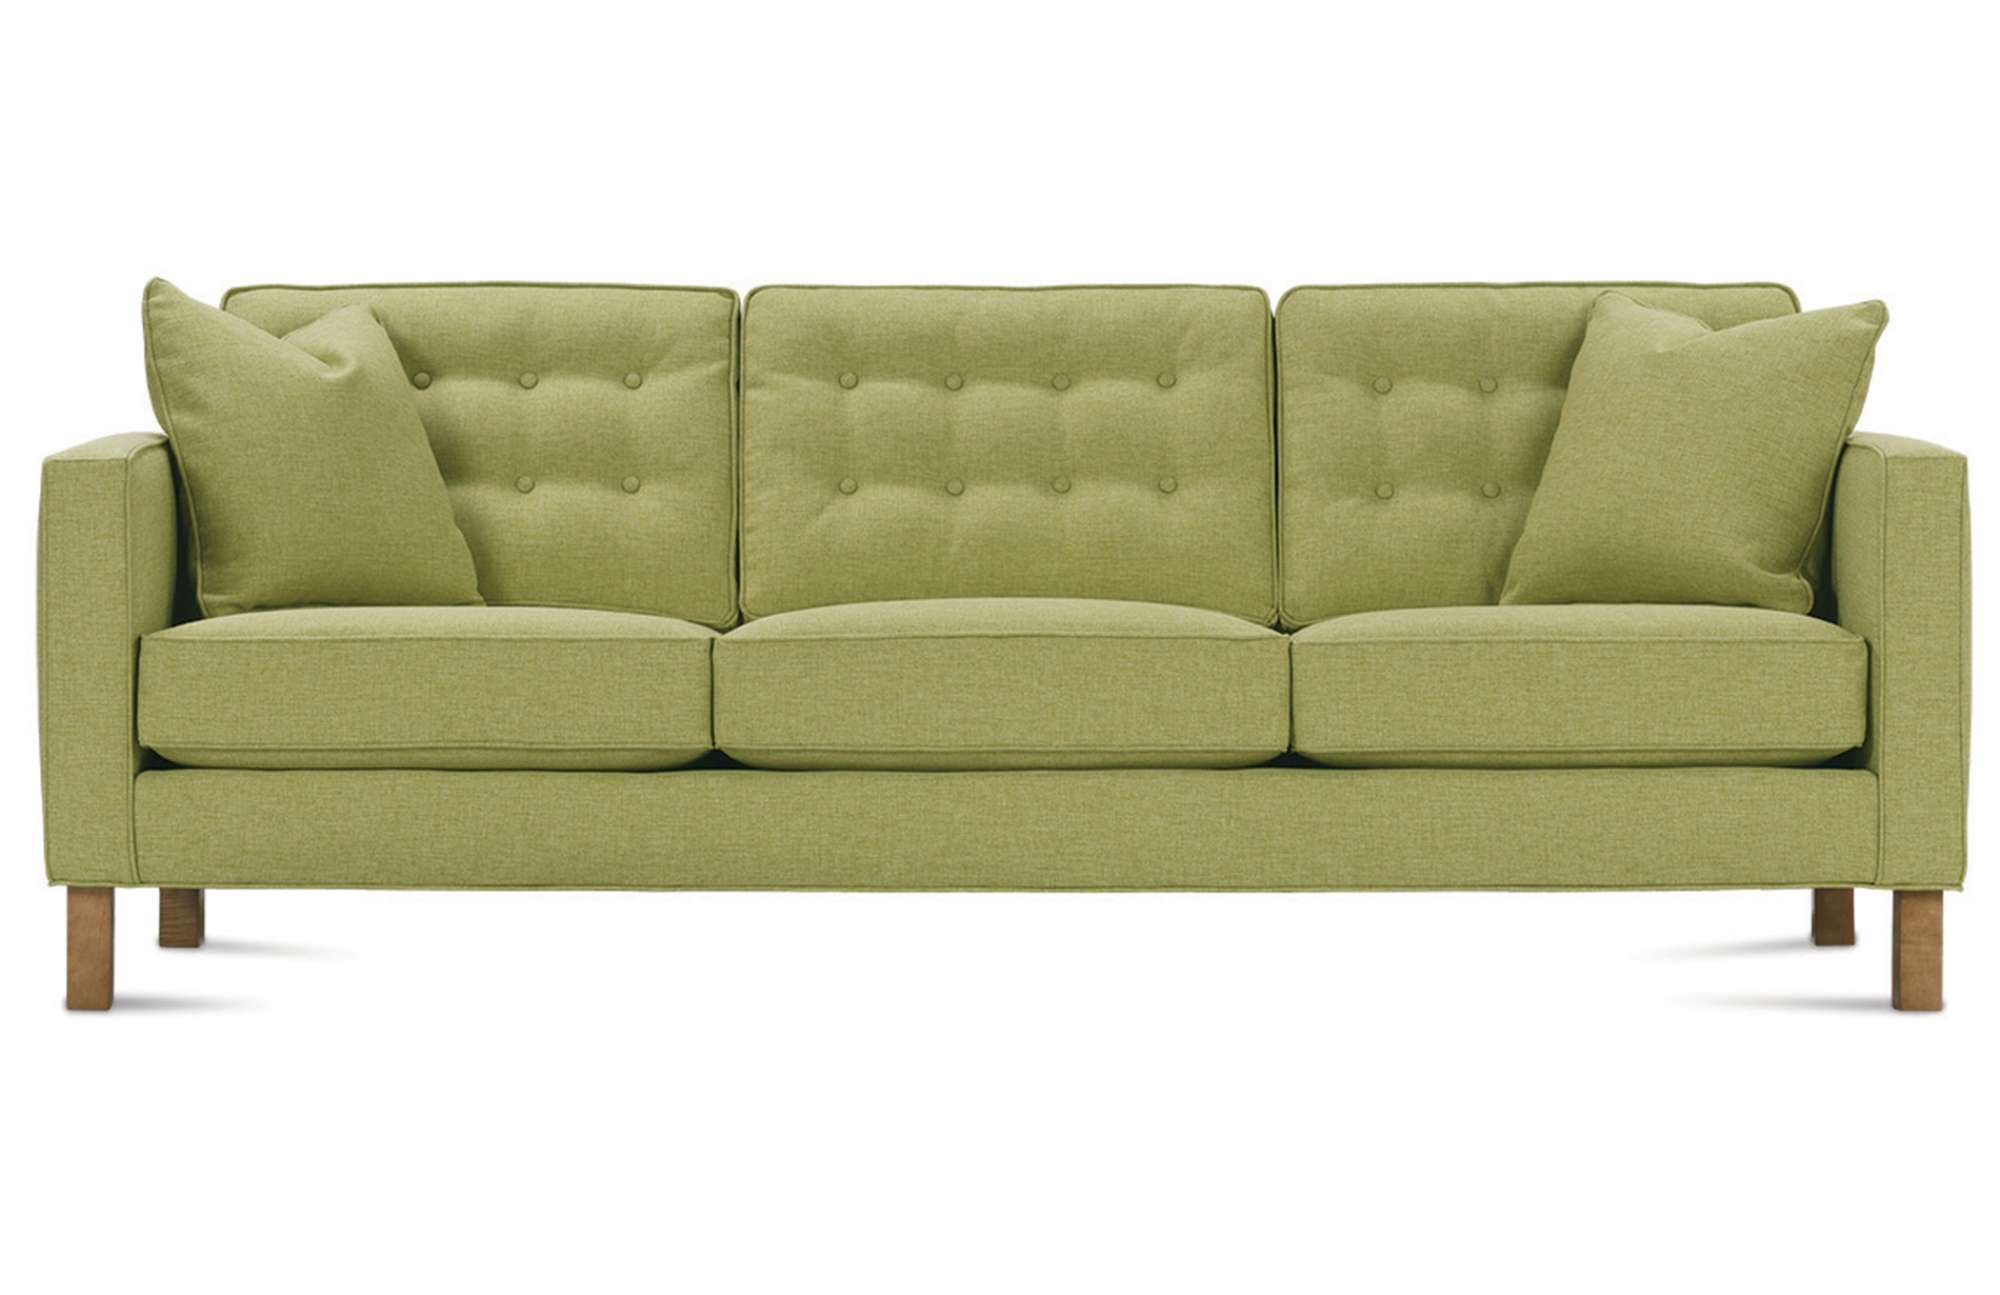 rowe sectional sleeper sofa photo - 1